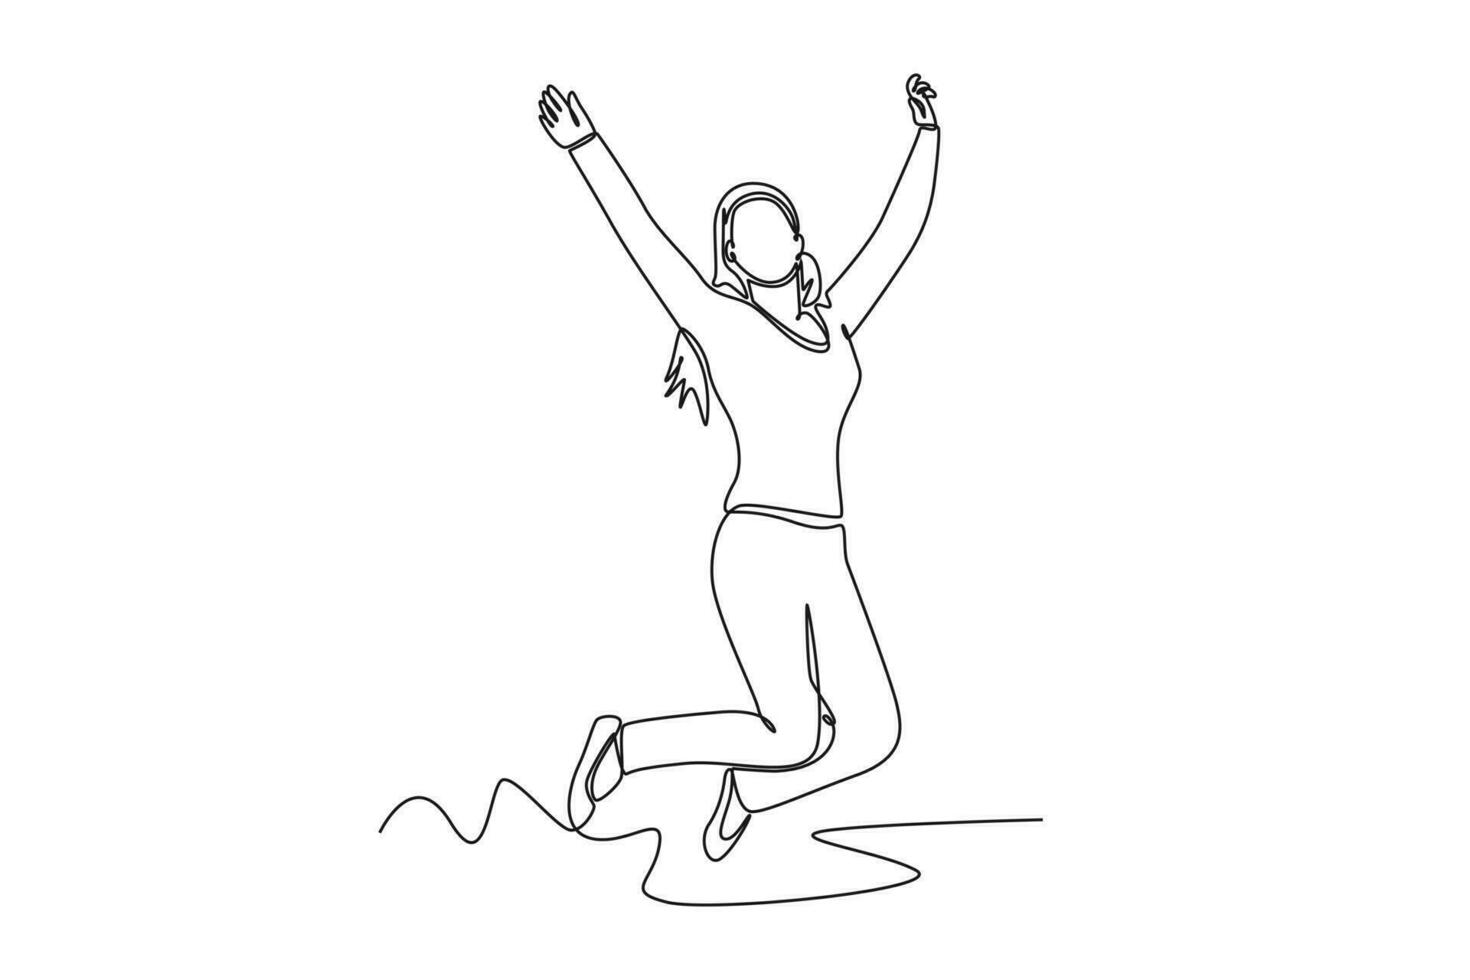 dibujo de una persona saltando